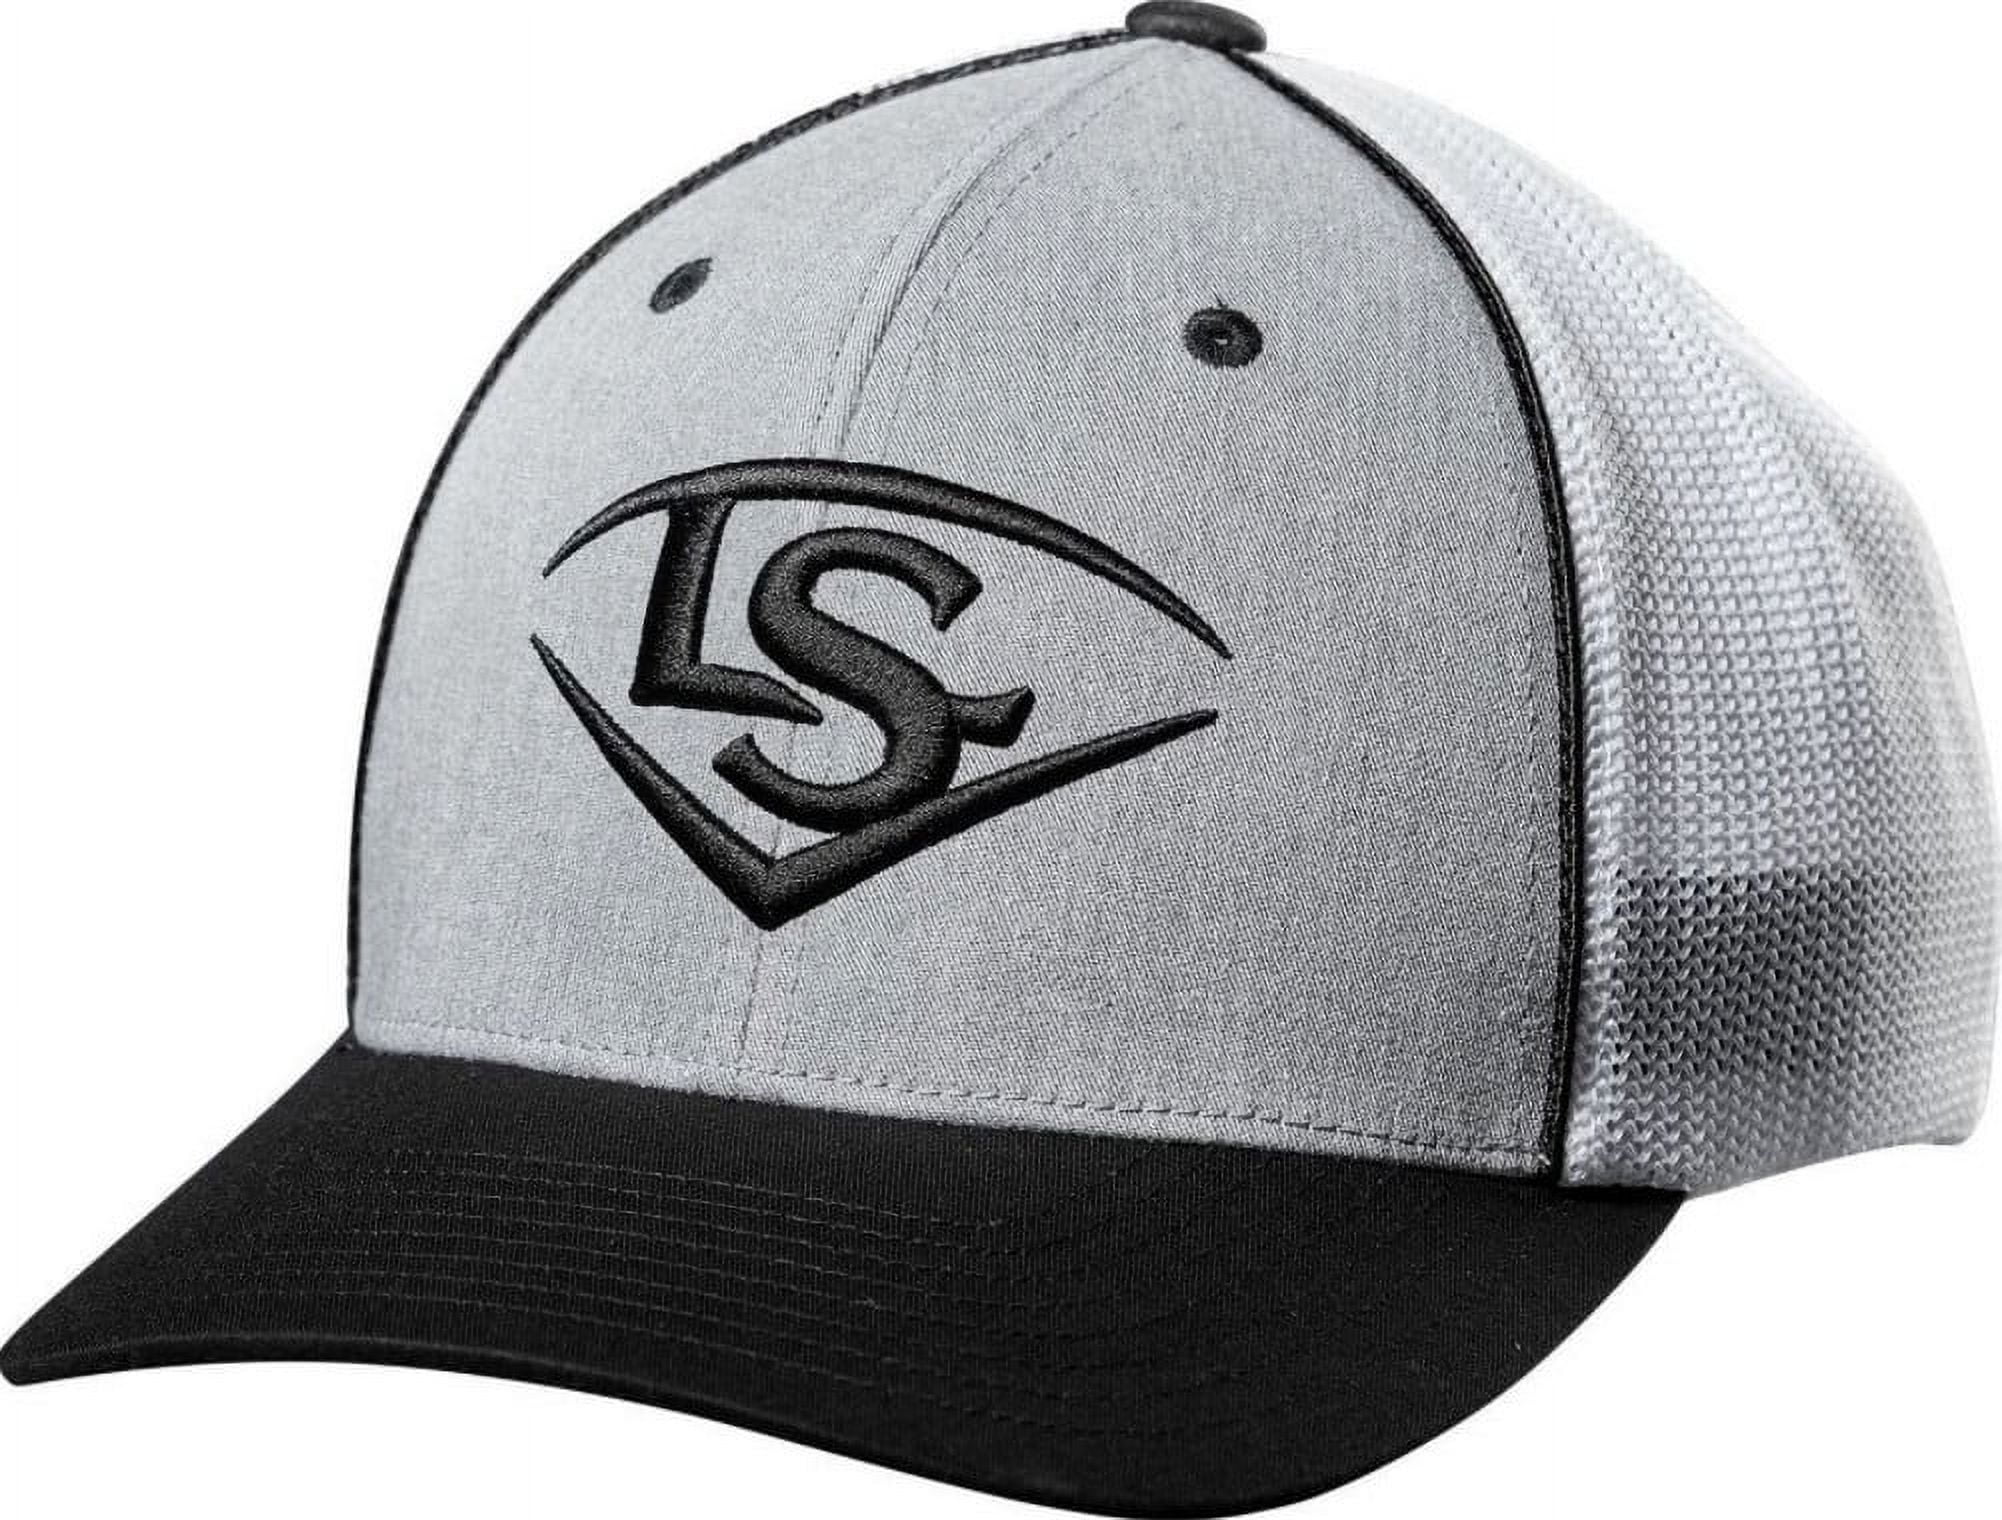 Louisville Slugger Hats for Men